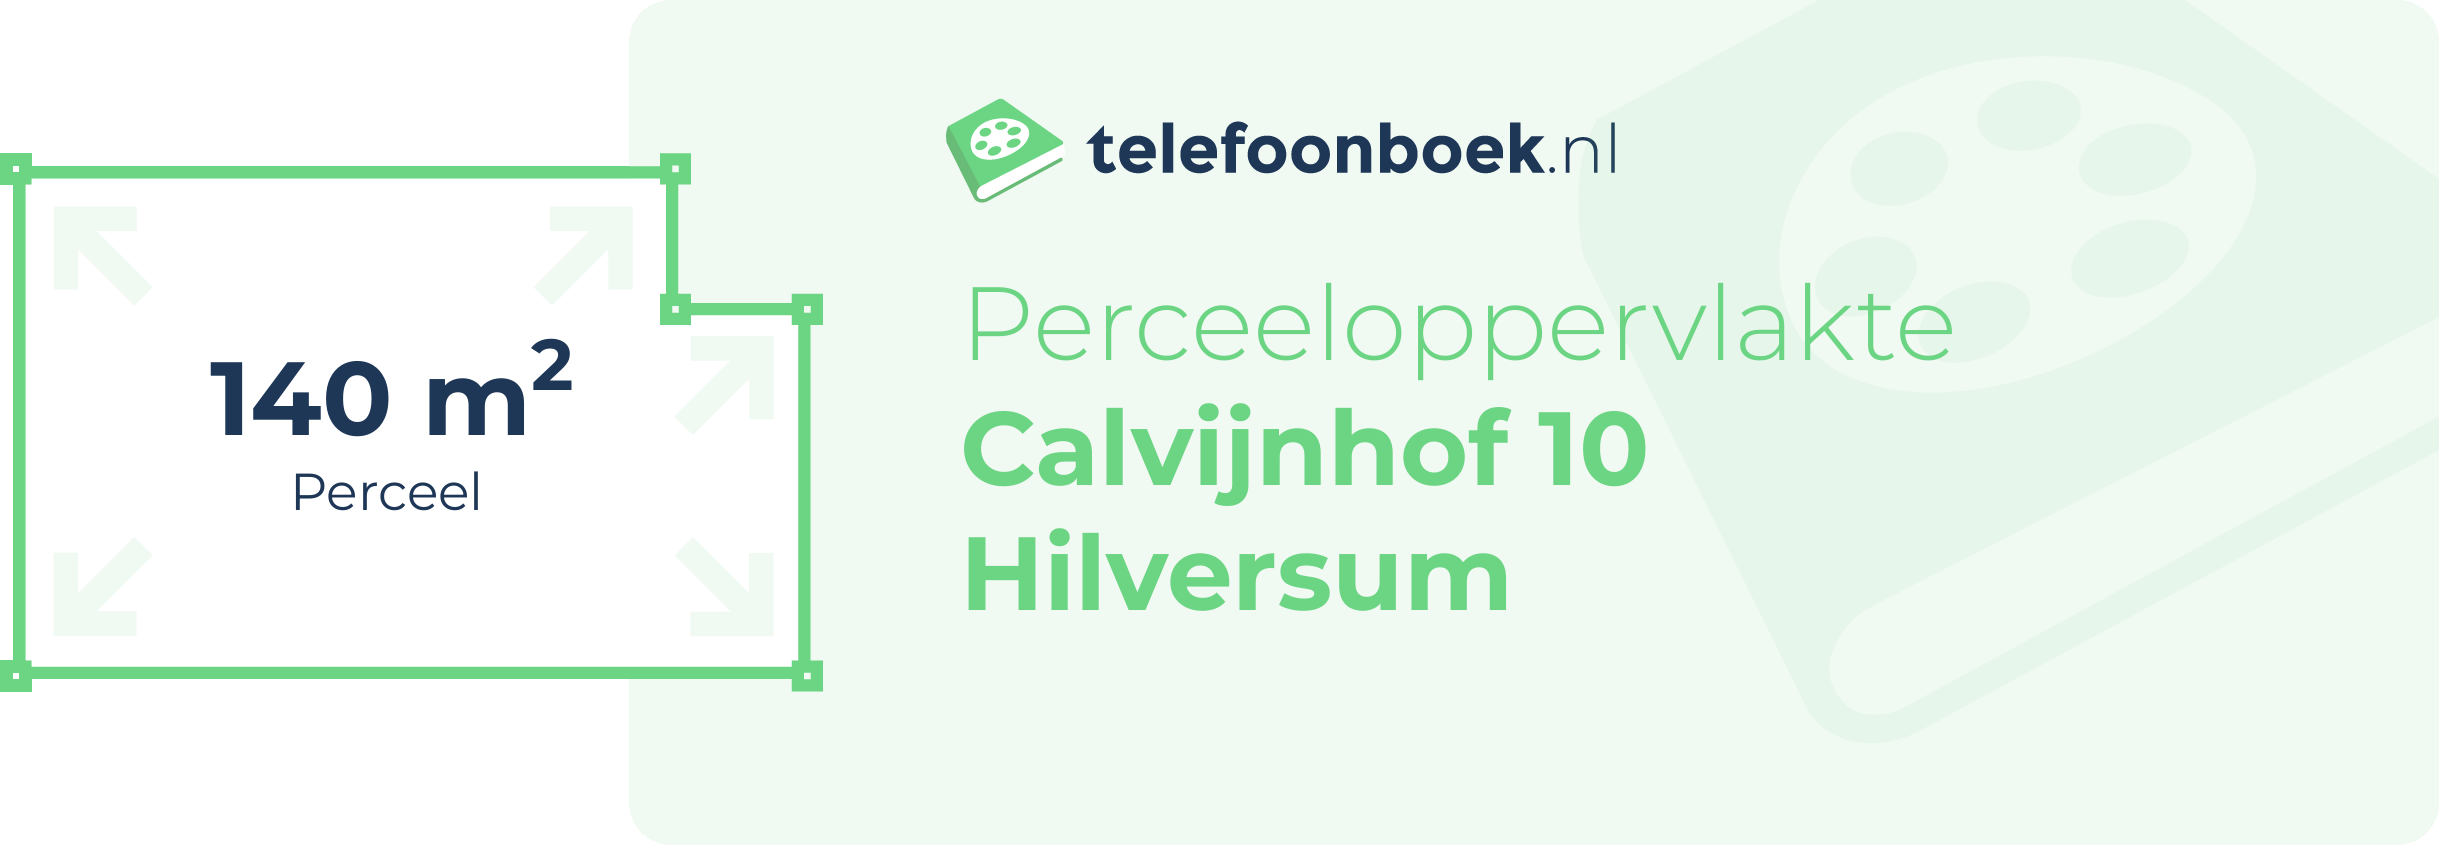 Perceeloppervlakte Calvijnhof 10 Hilversum